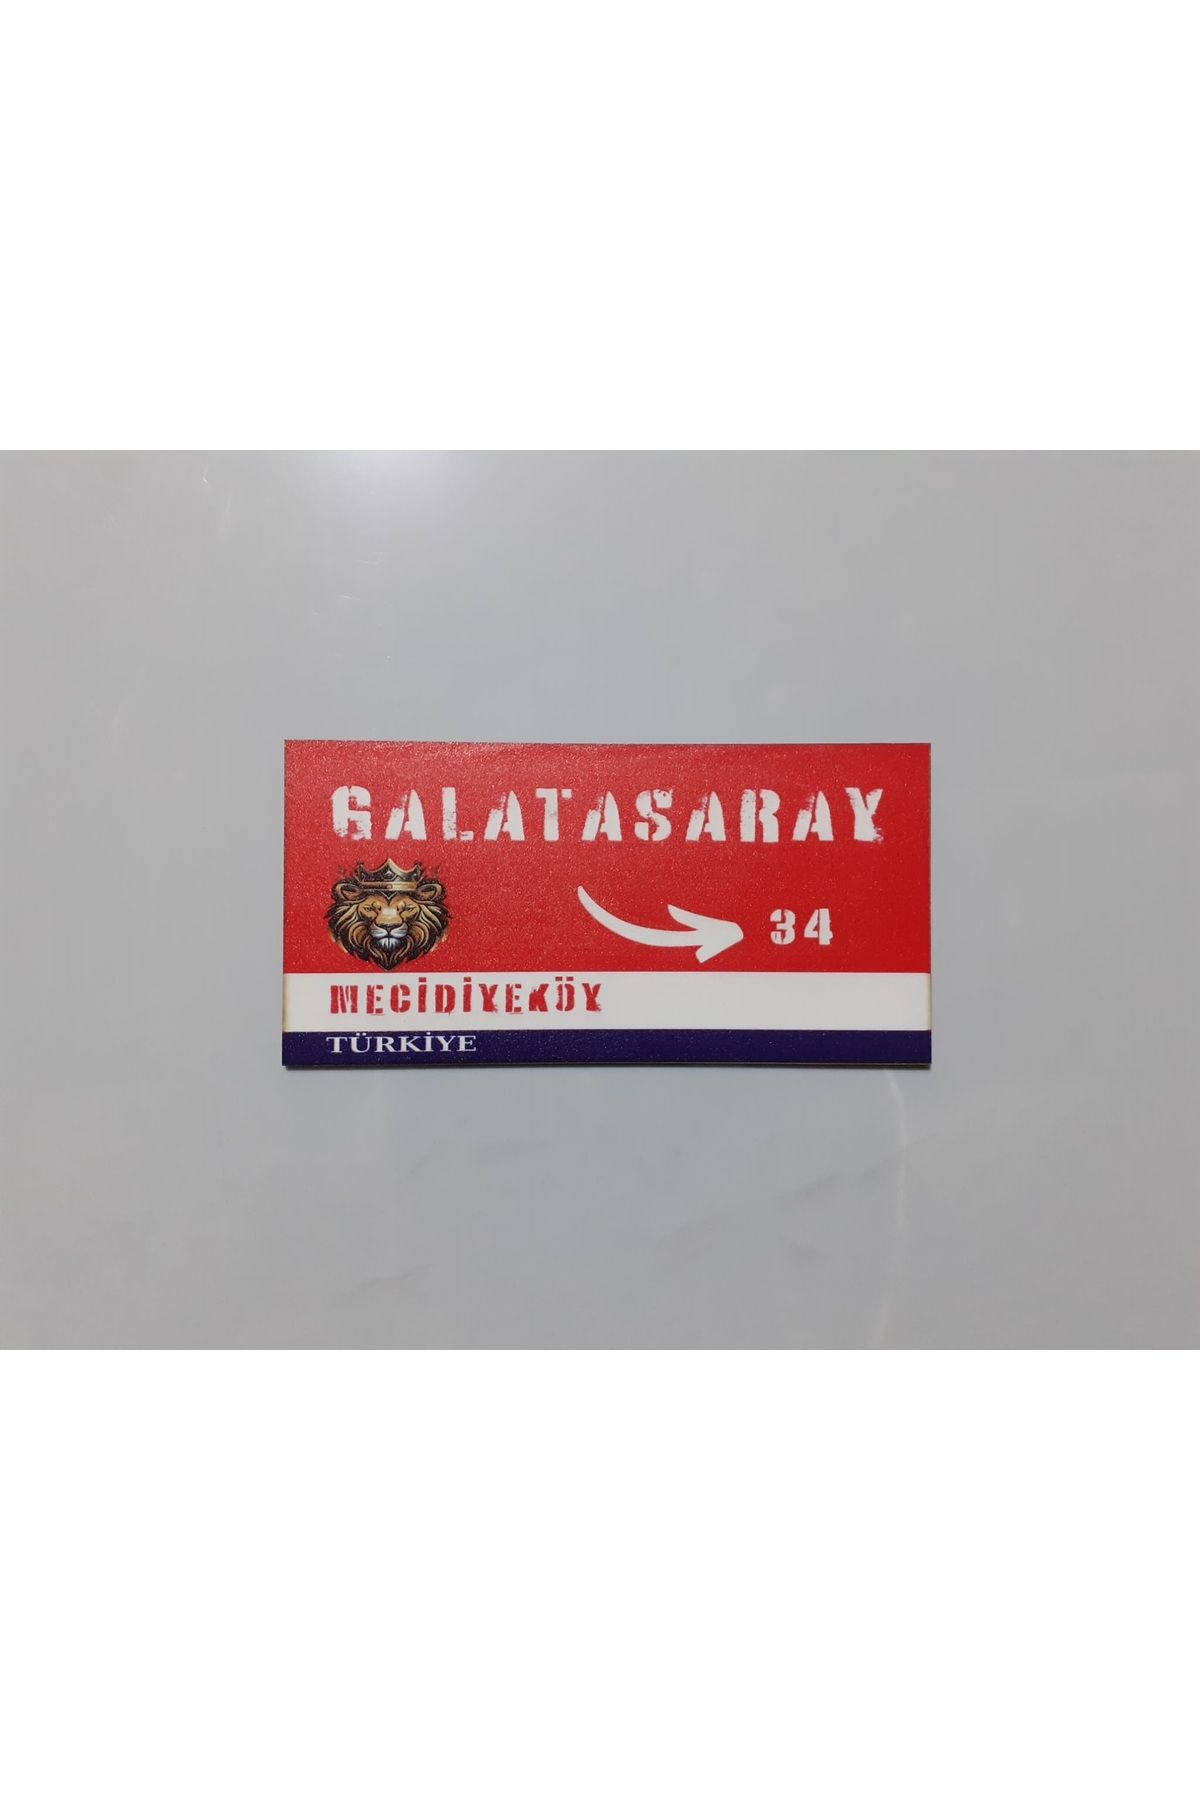 Massachusetts Galatasaray Yön Tabelası, ahşap poster, galatasaray posteri 13x22 cm